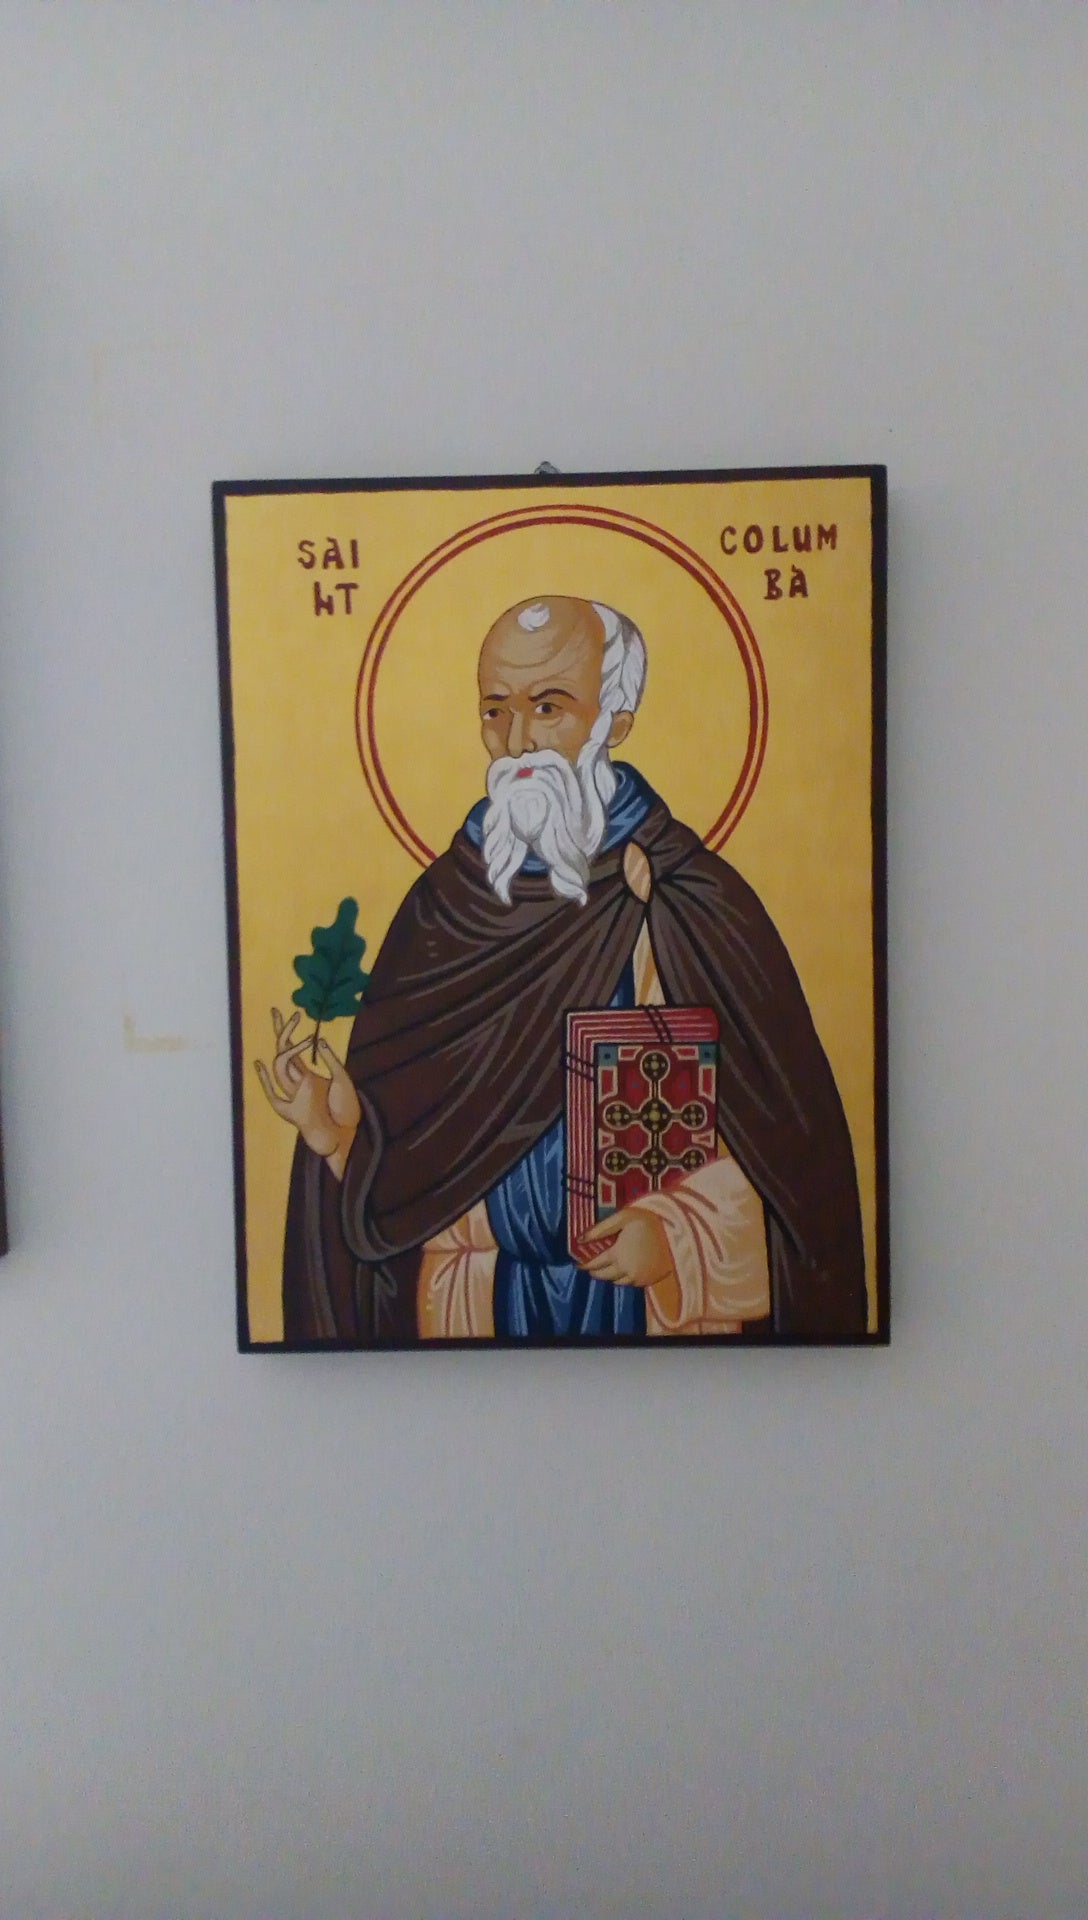 Saint Columba of Iona